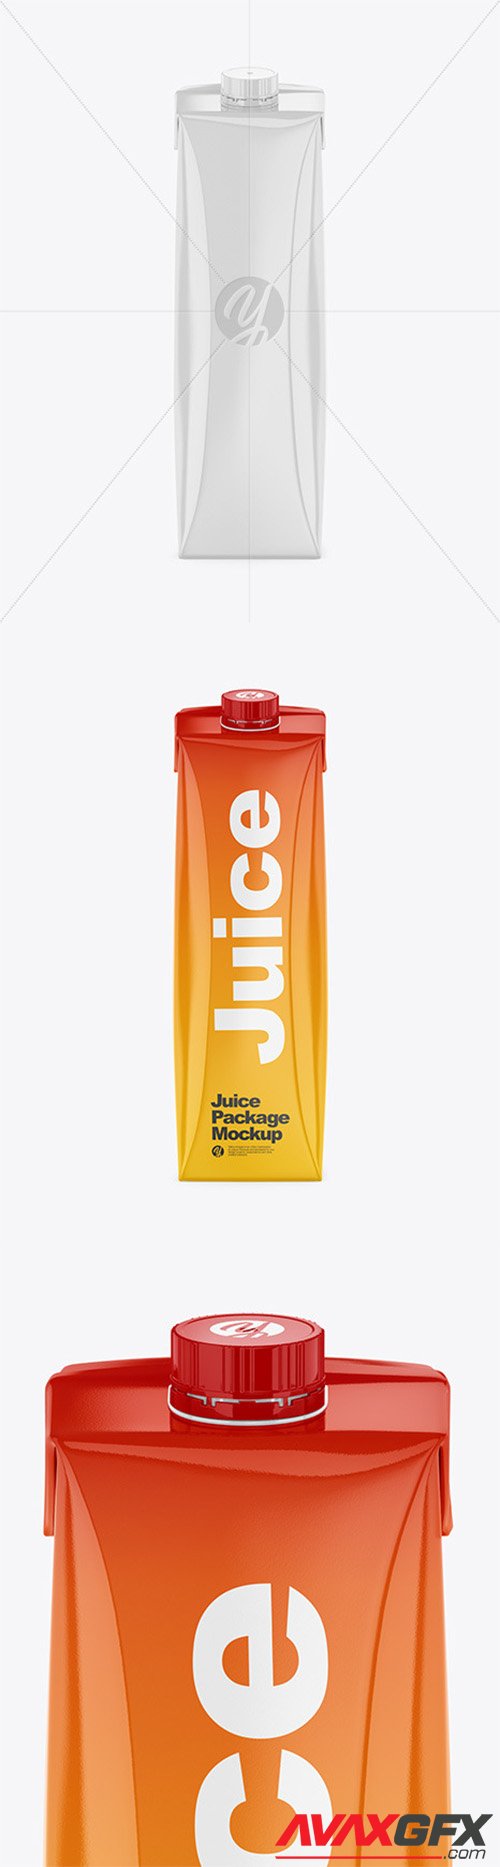 Glossy Juice Carton Package Mockup 59562